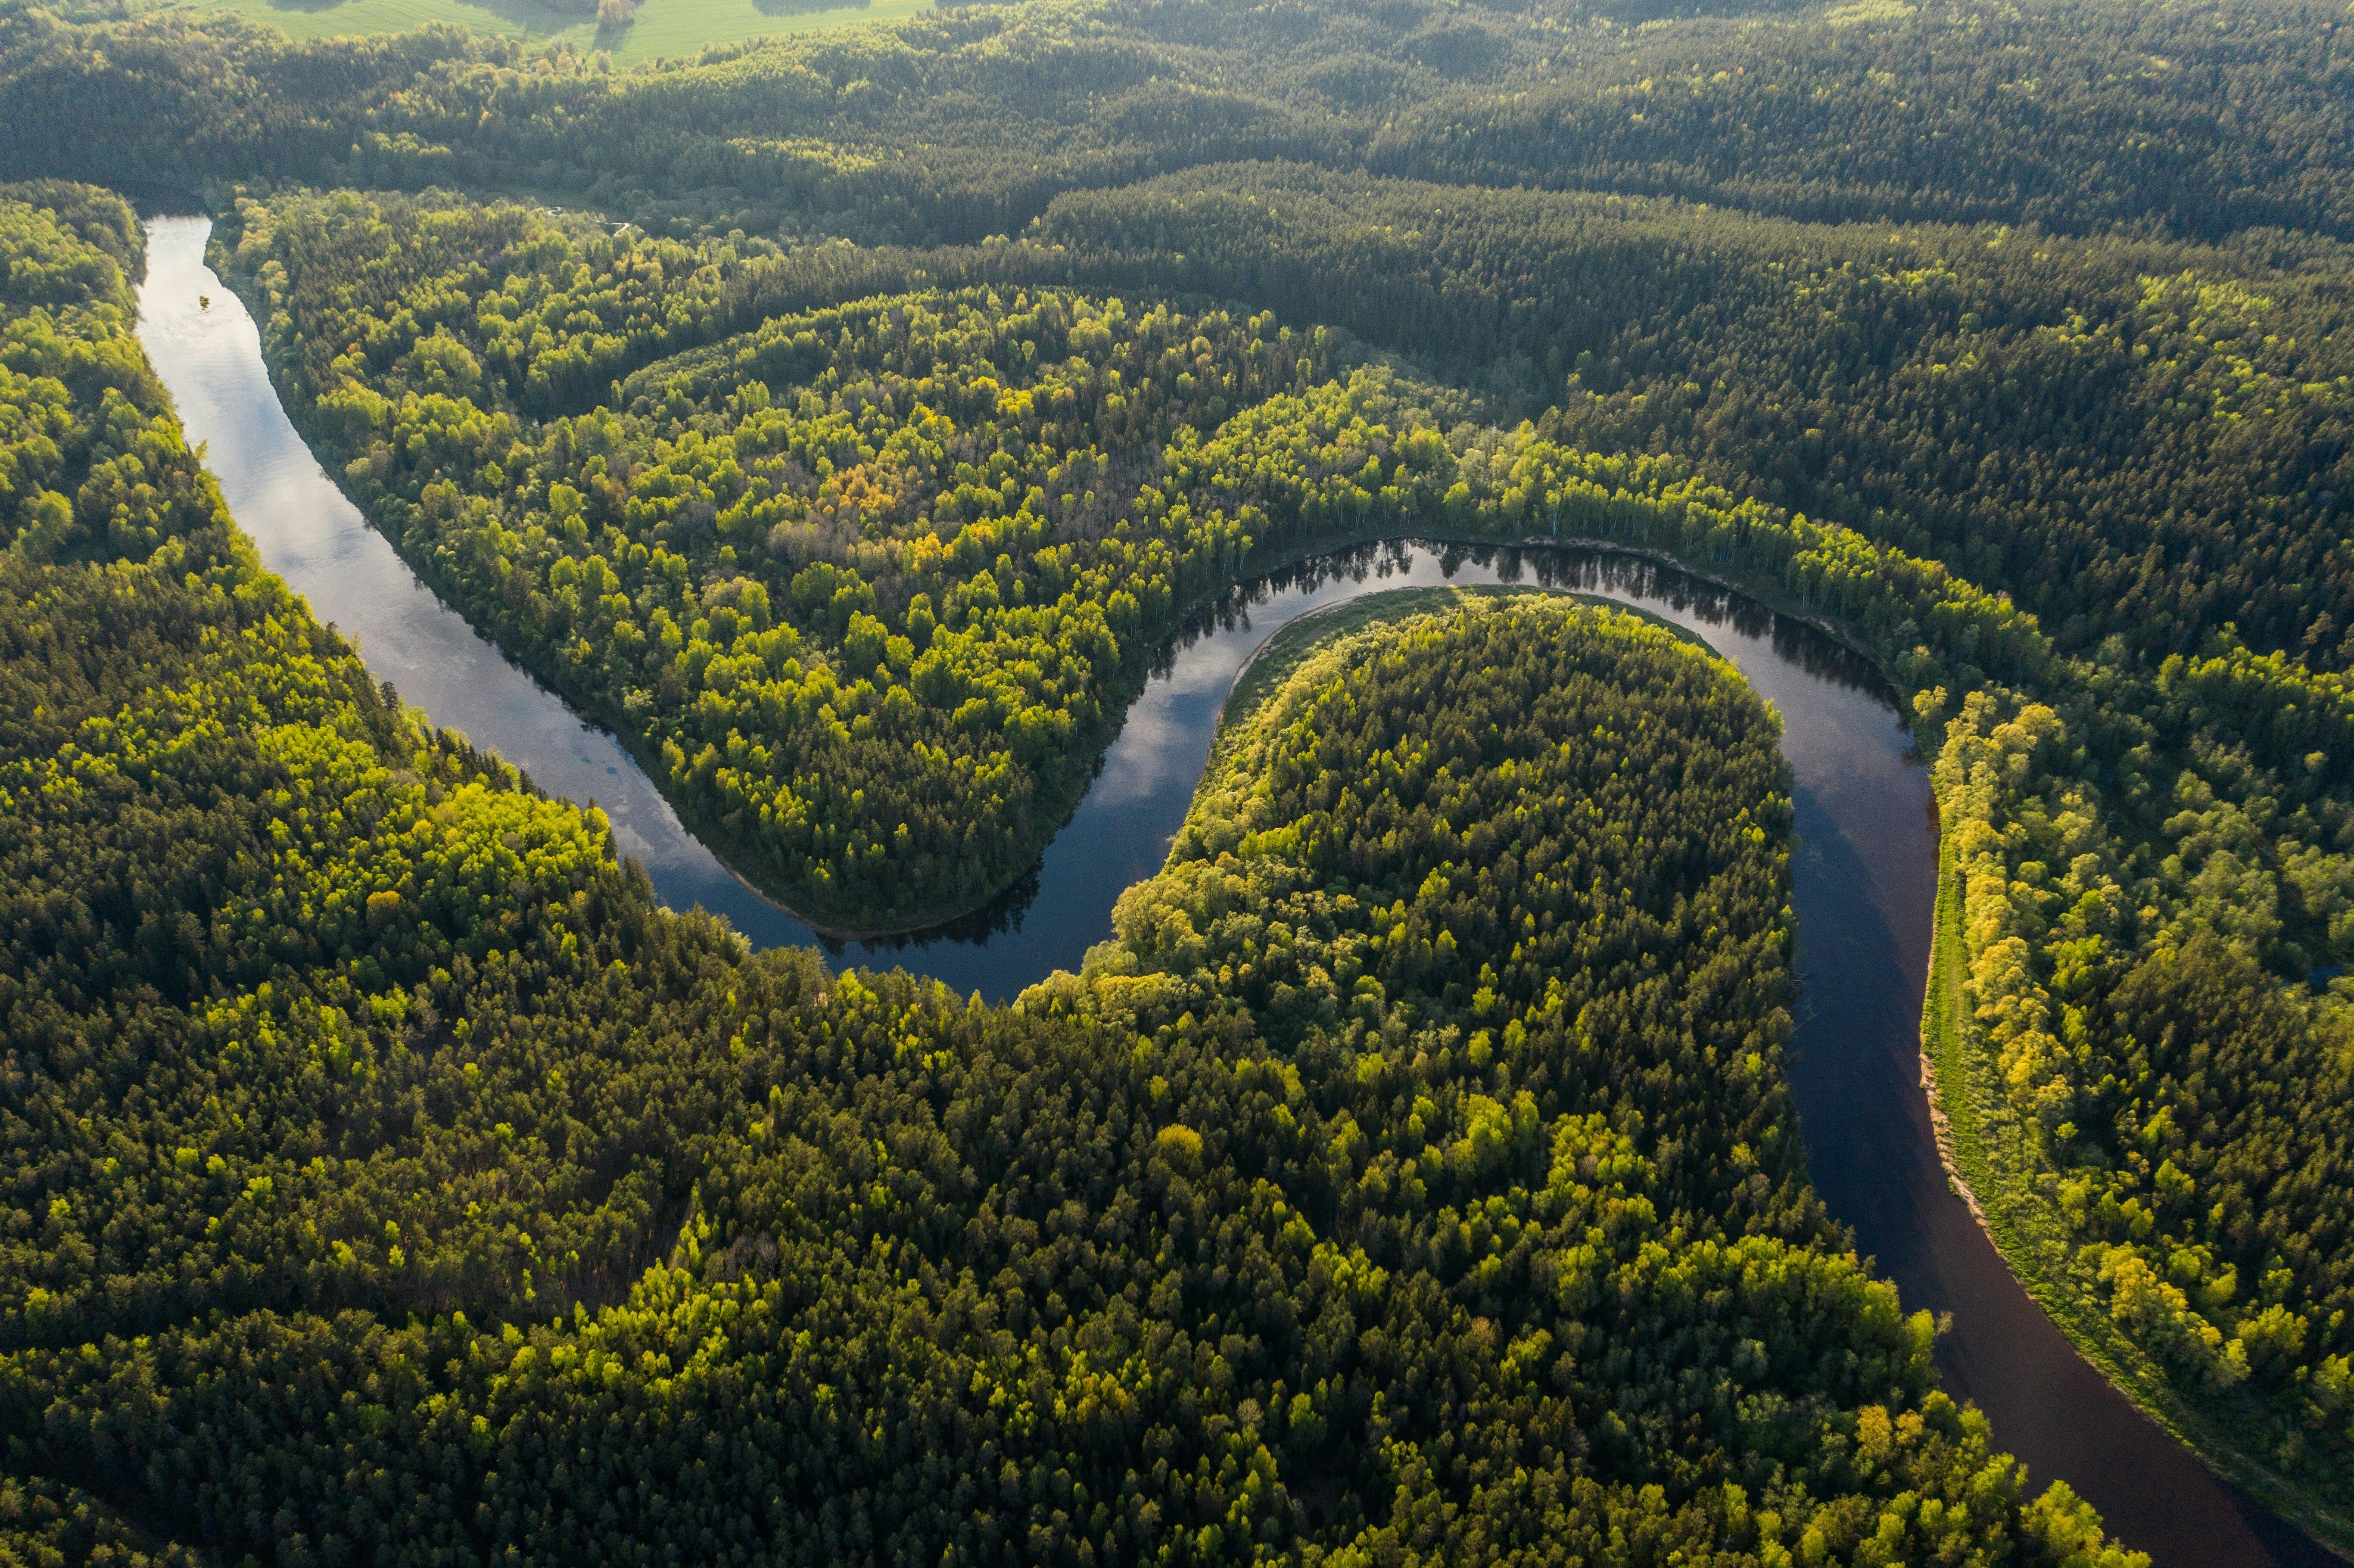 Vista superior da floresta amazônica intocada serpenteada por rio de águas escuras.